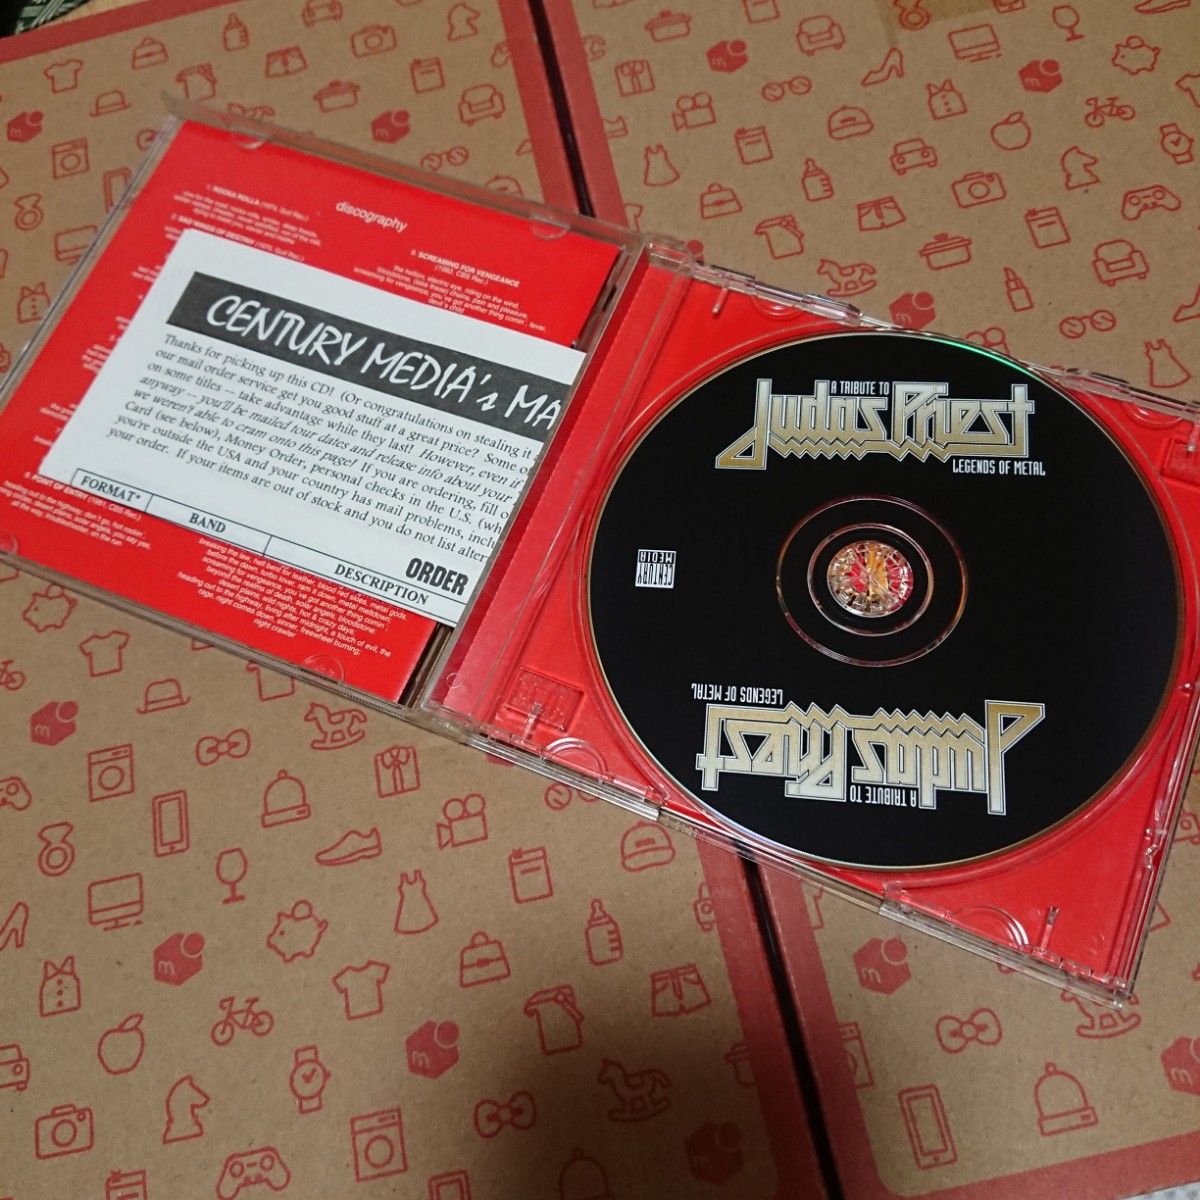 中古CD Tribute to Judas Priest  Legend OF METAL